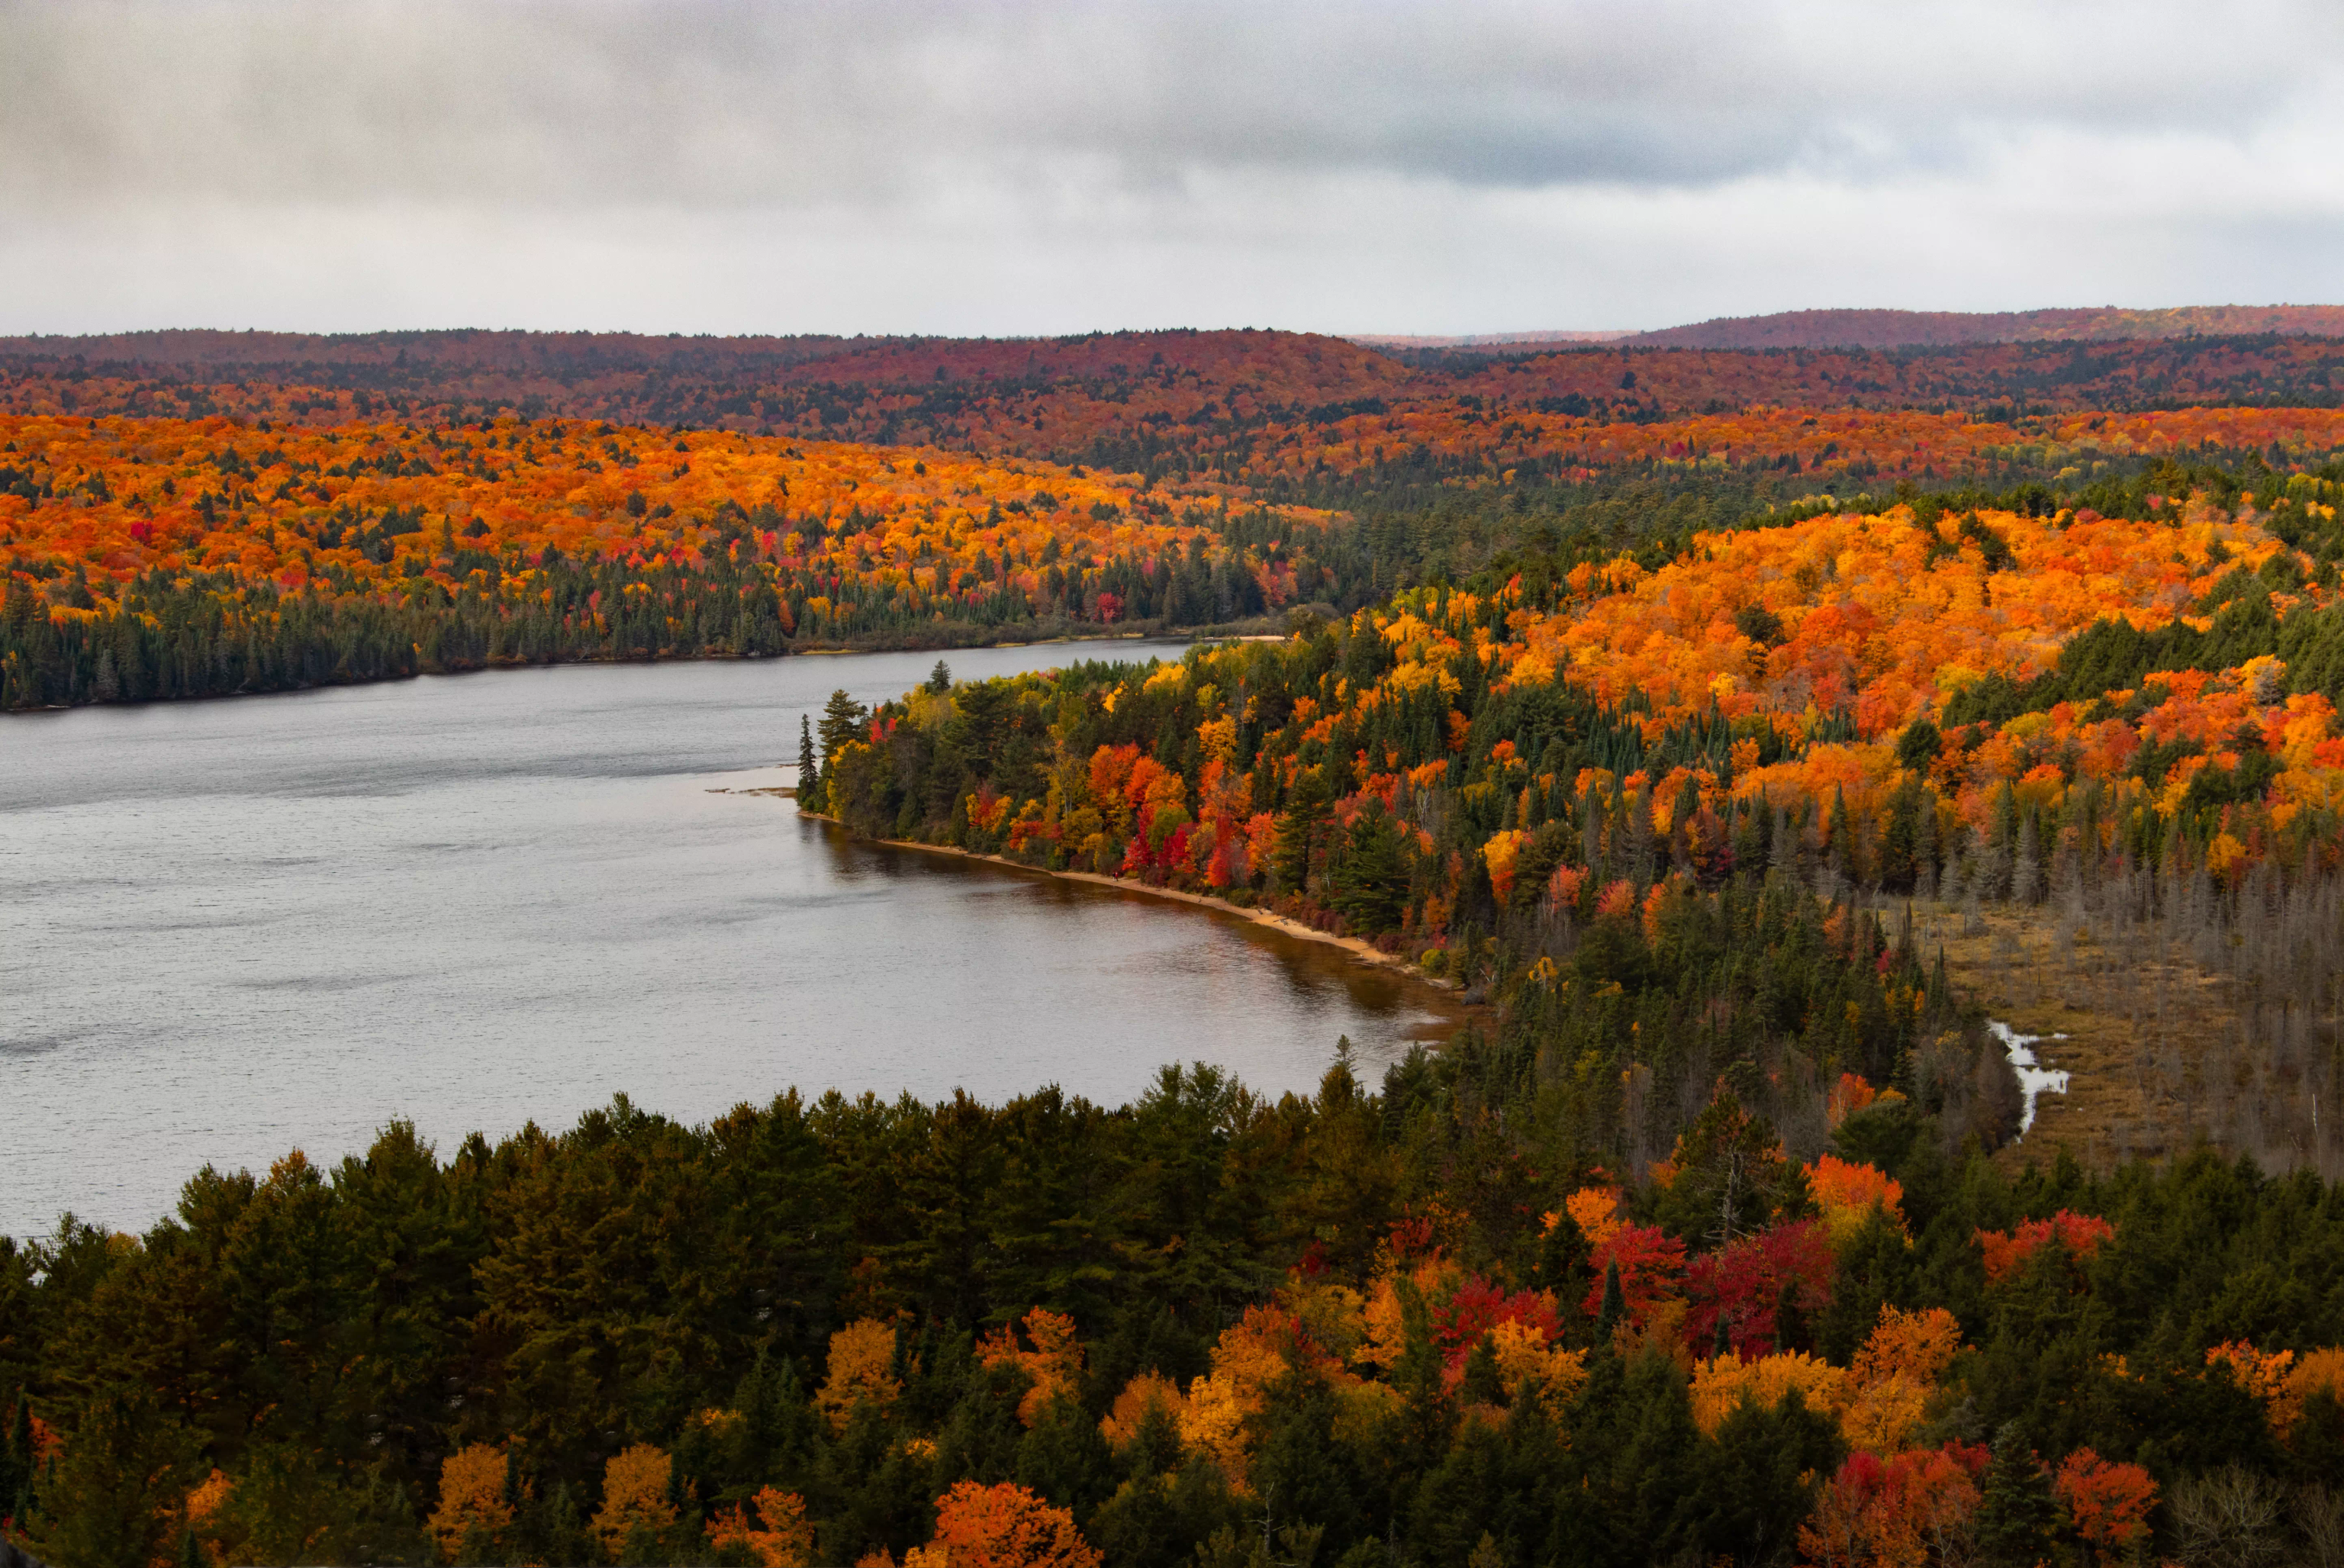 Visiting Ontario's best fall foliage destination.